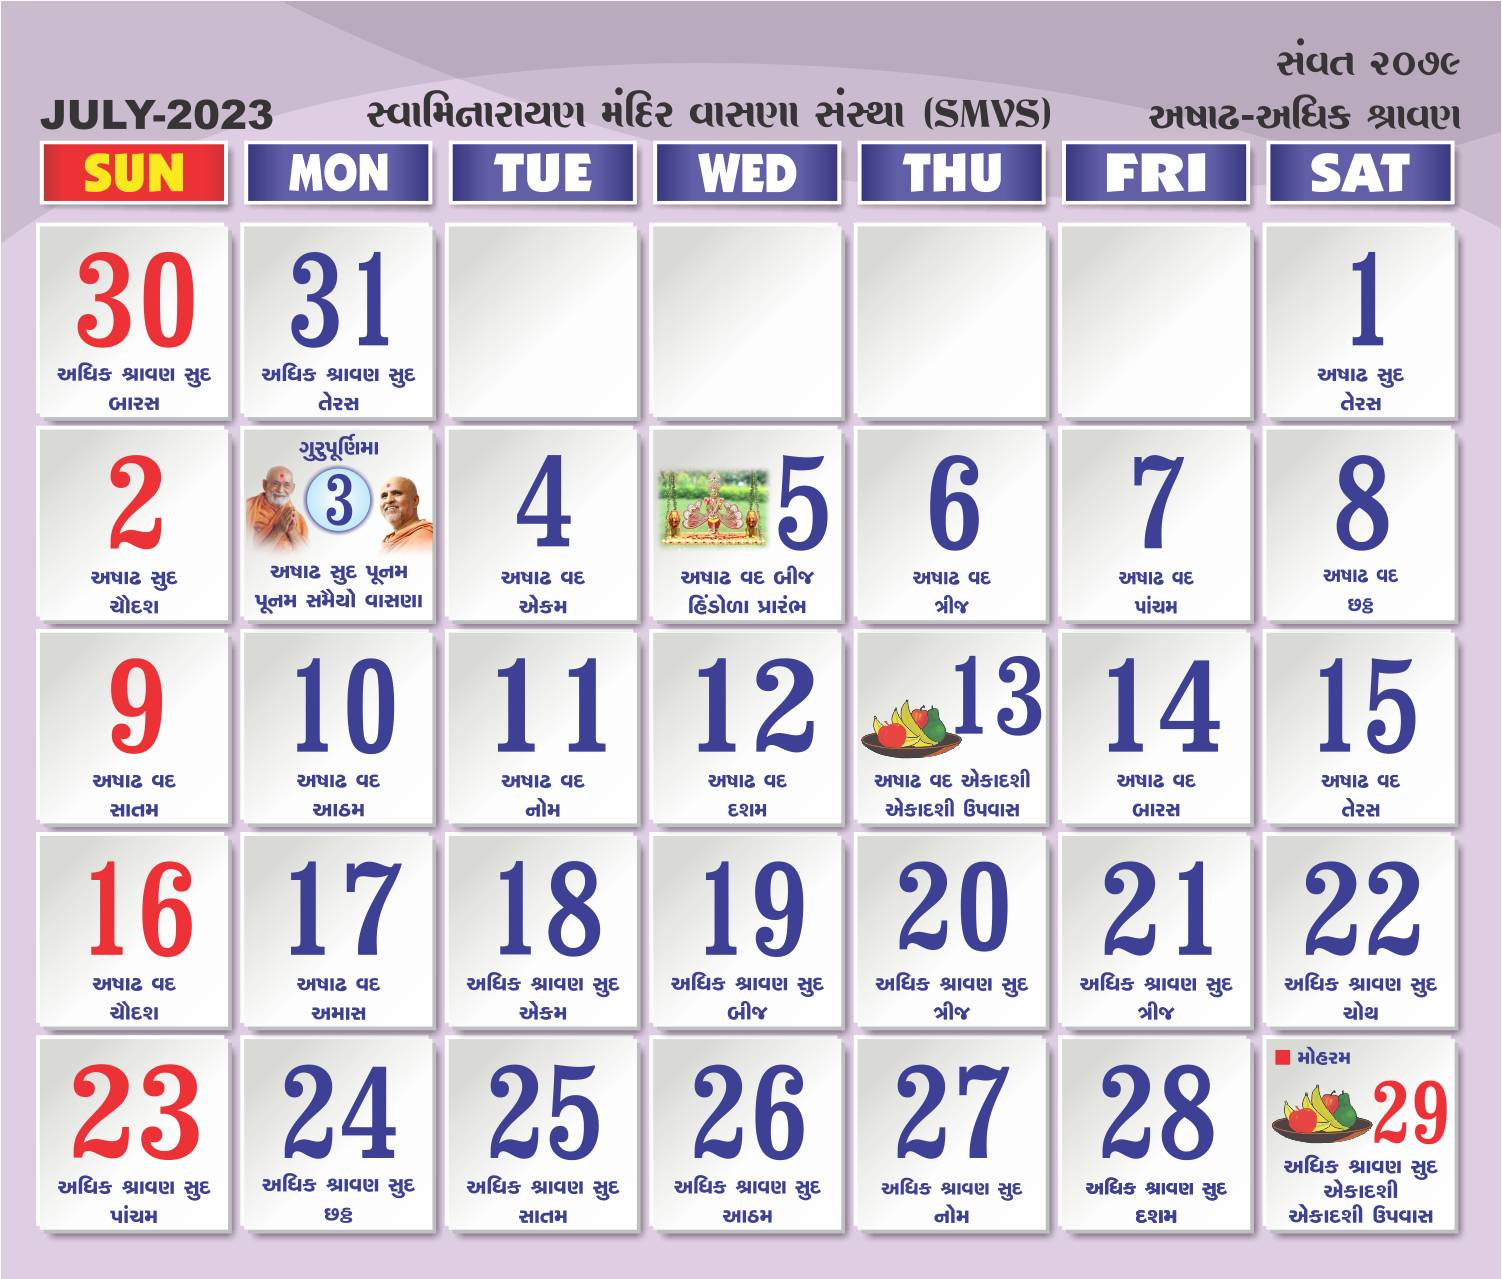 Swaminarayan Mandir Vasna Sanstha - Smvs in Baps Calendar July 2024